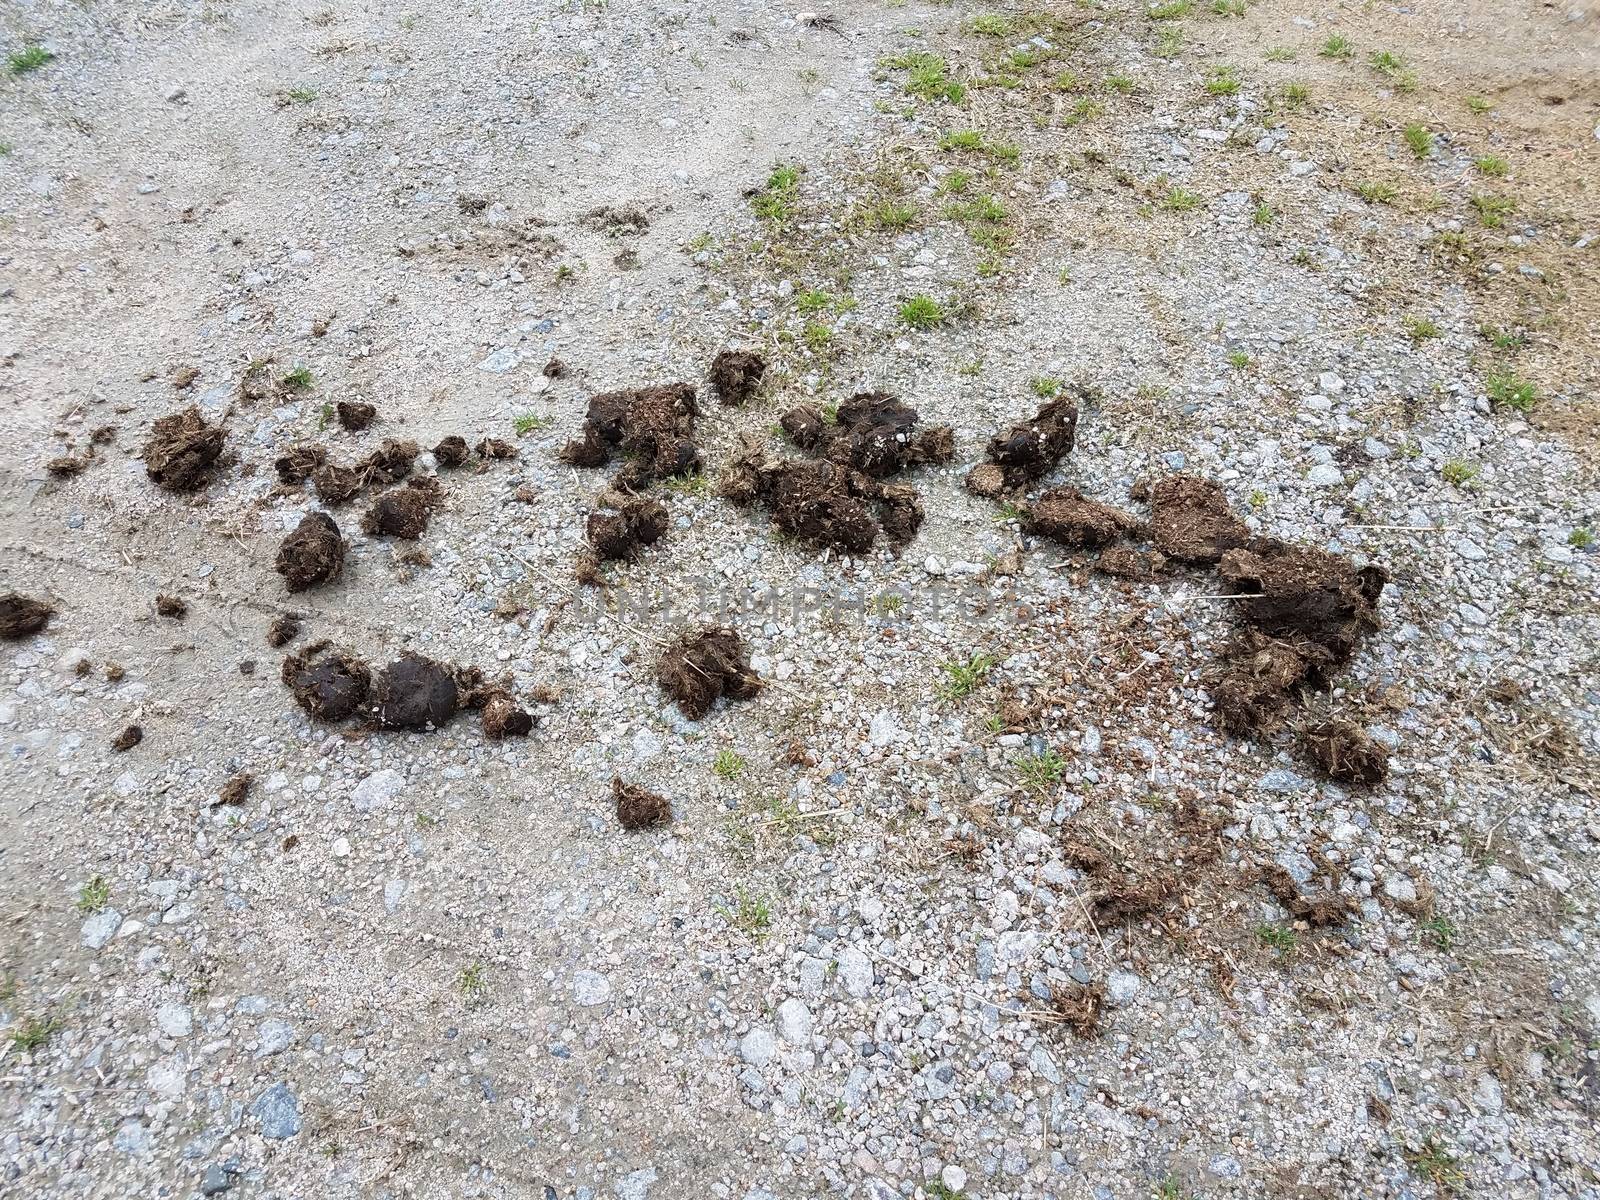 brown horse poop or feces on grey stone or gravel by stockphotofan1